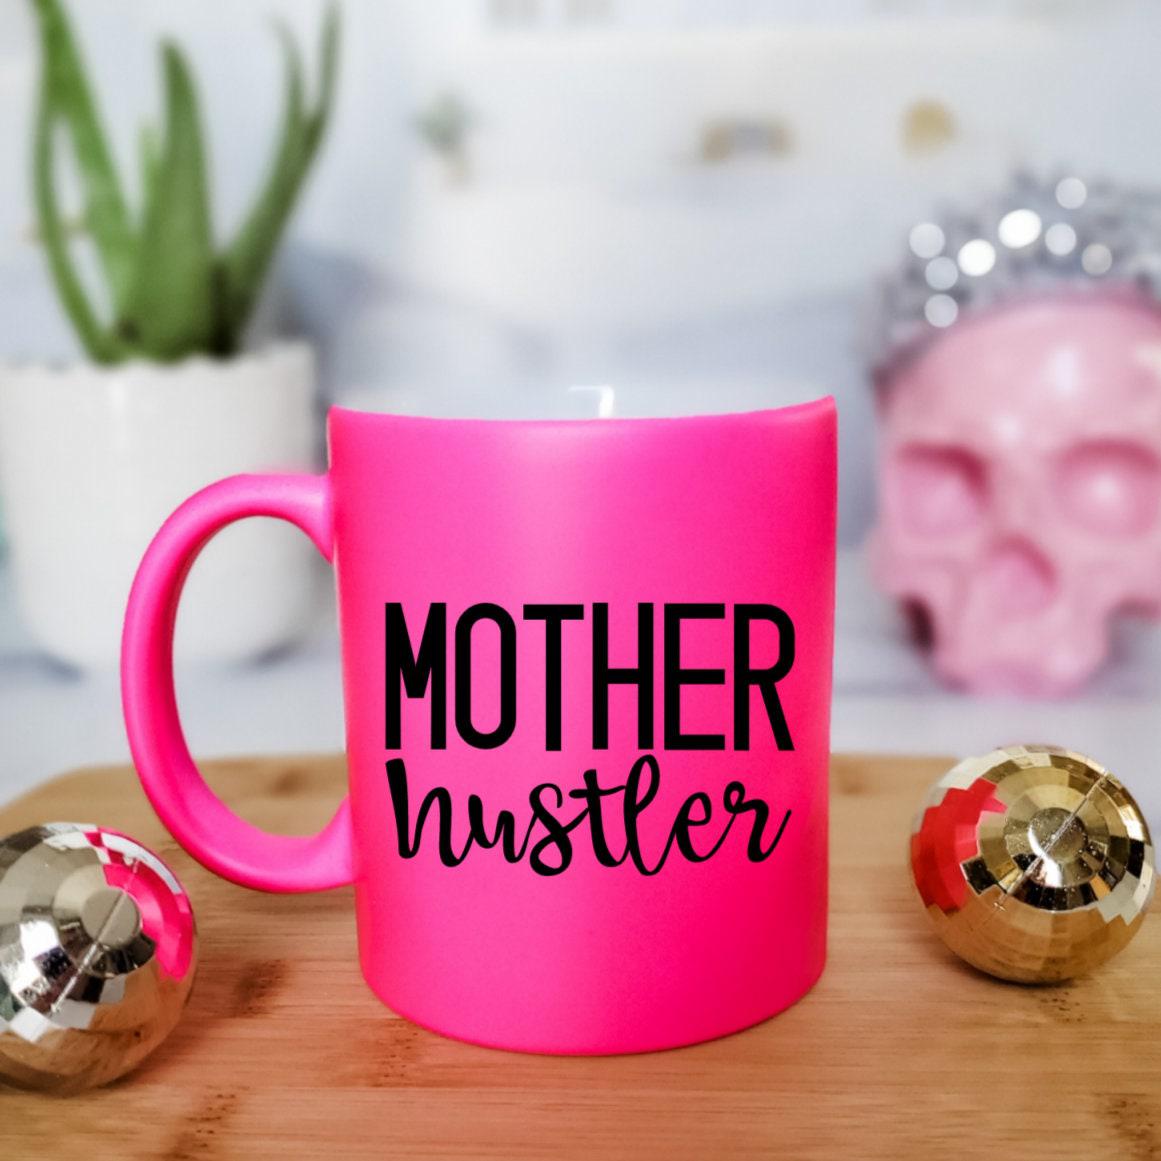 Mother Hustler Pink Coffee Mug - Funny Gift For Mom - Funny Mom Mug - Mom Birthday Mug for Entrepreneur - Working Mom Gift for Mother's Day